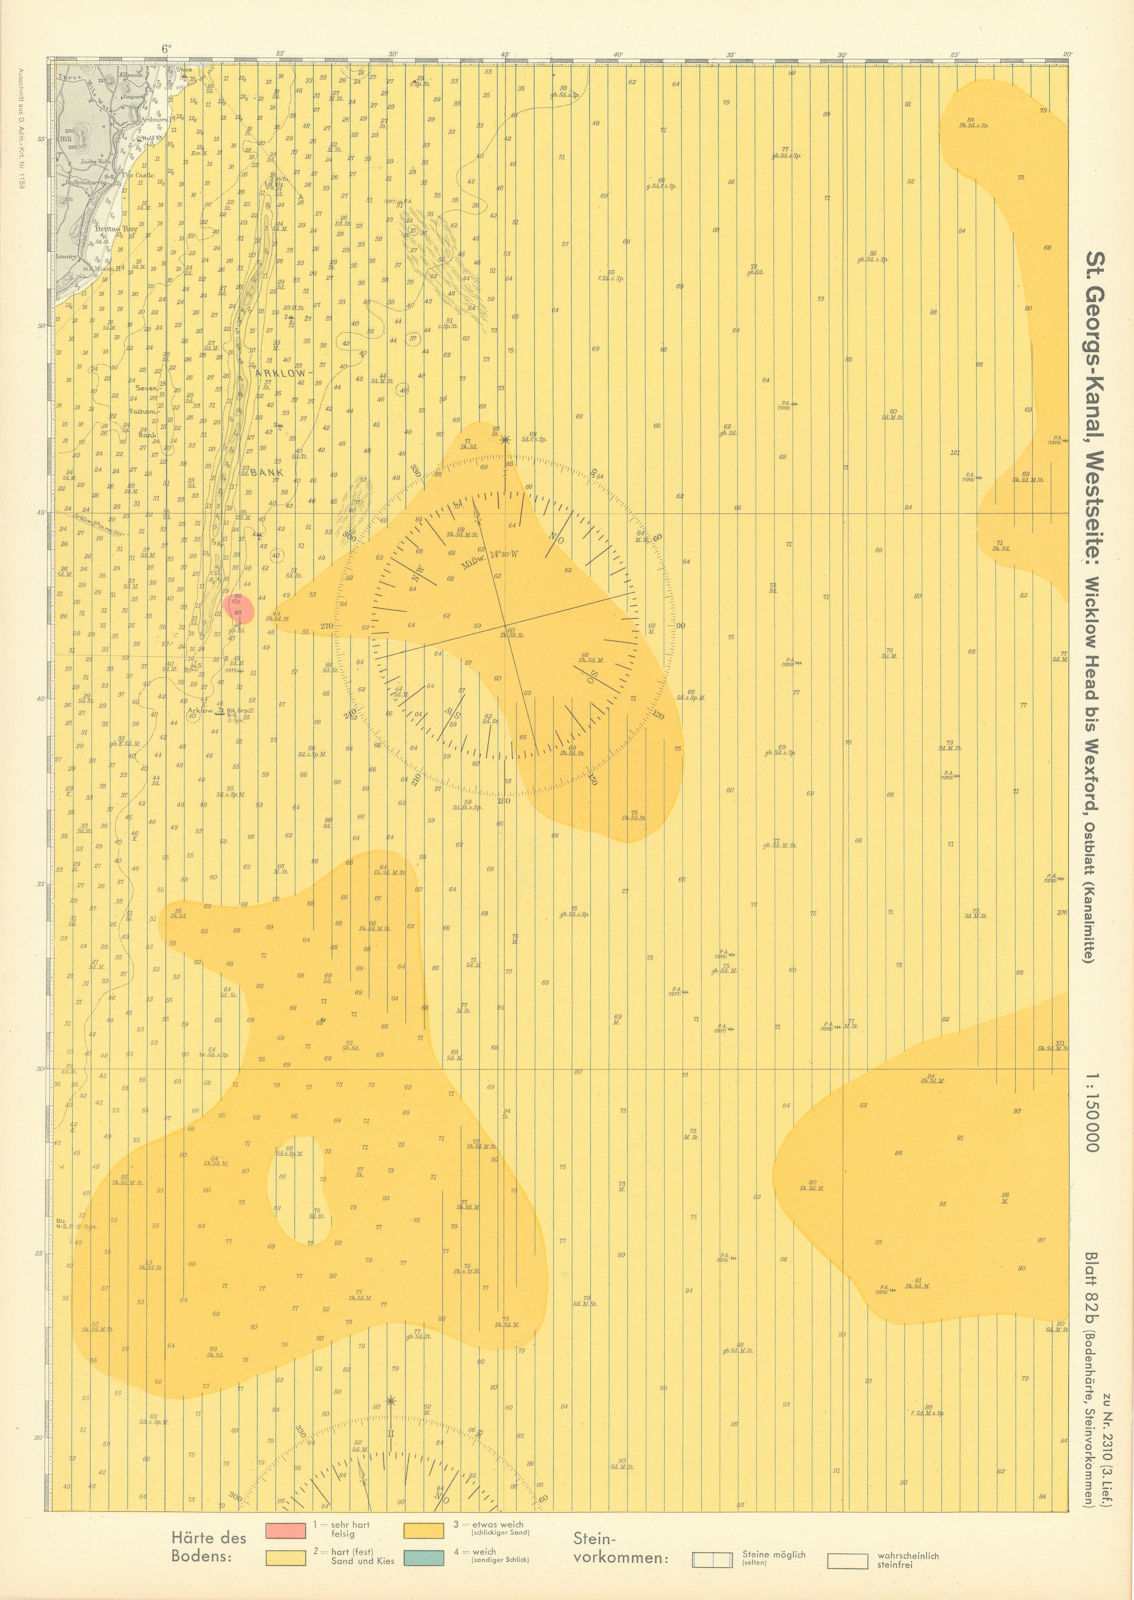 82b. Ireland coast Irish Sea Arklow Bank Wicklow. KRIEGSMARINE Nazi map 1940